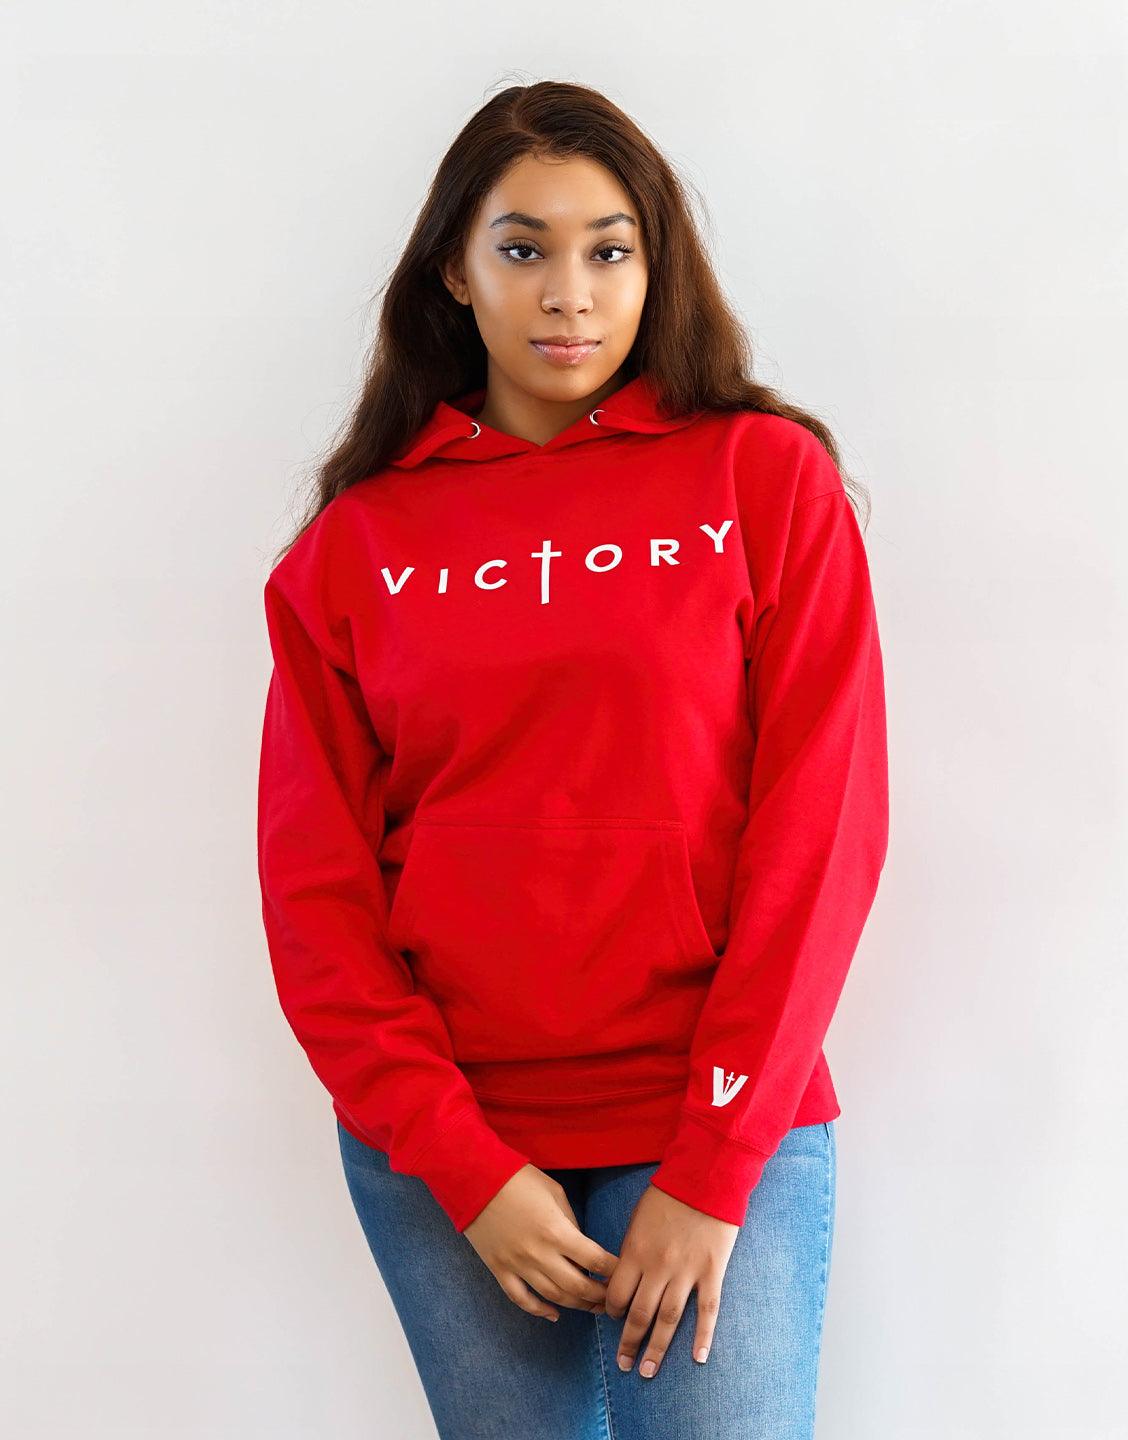 Victory Hoodie - Red - VOTC Clothing